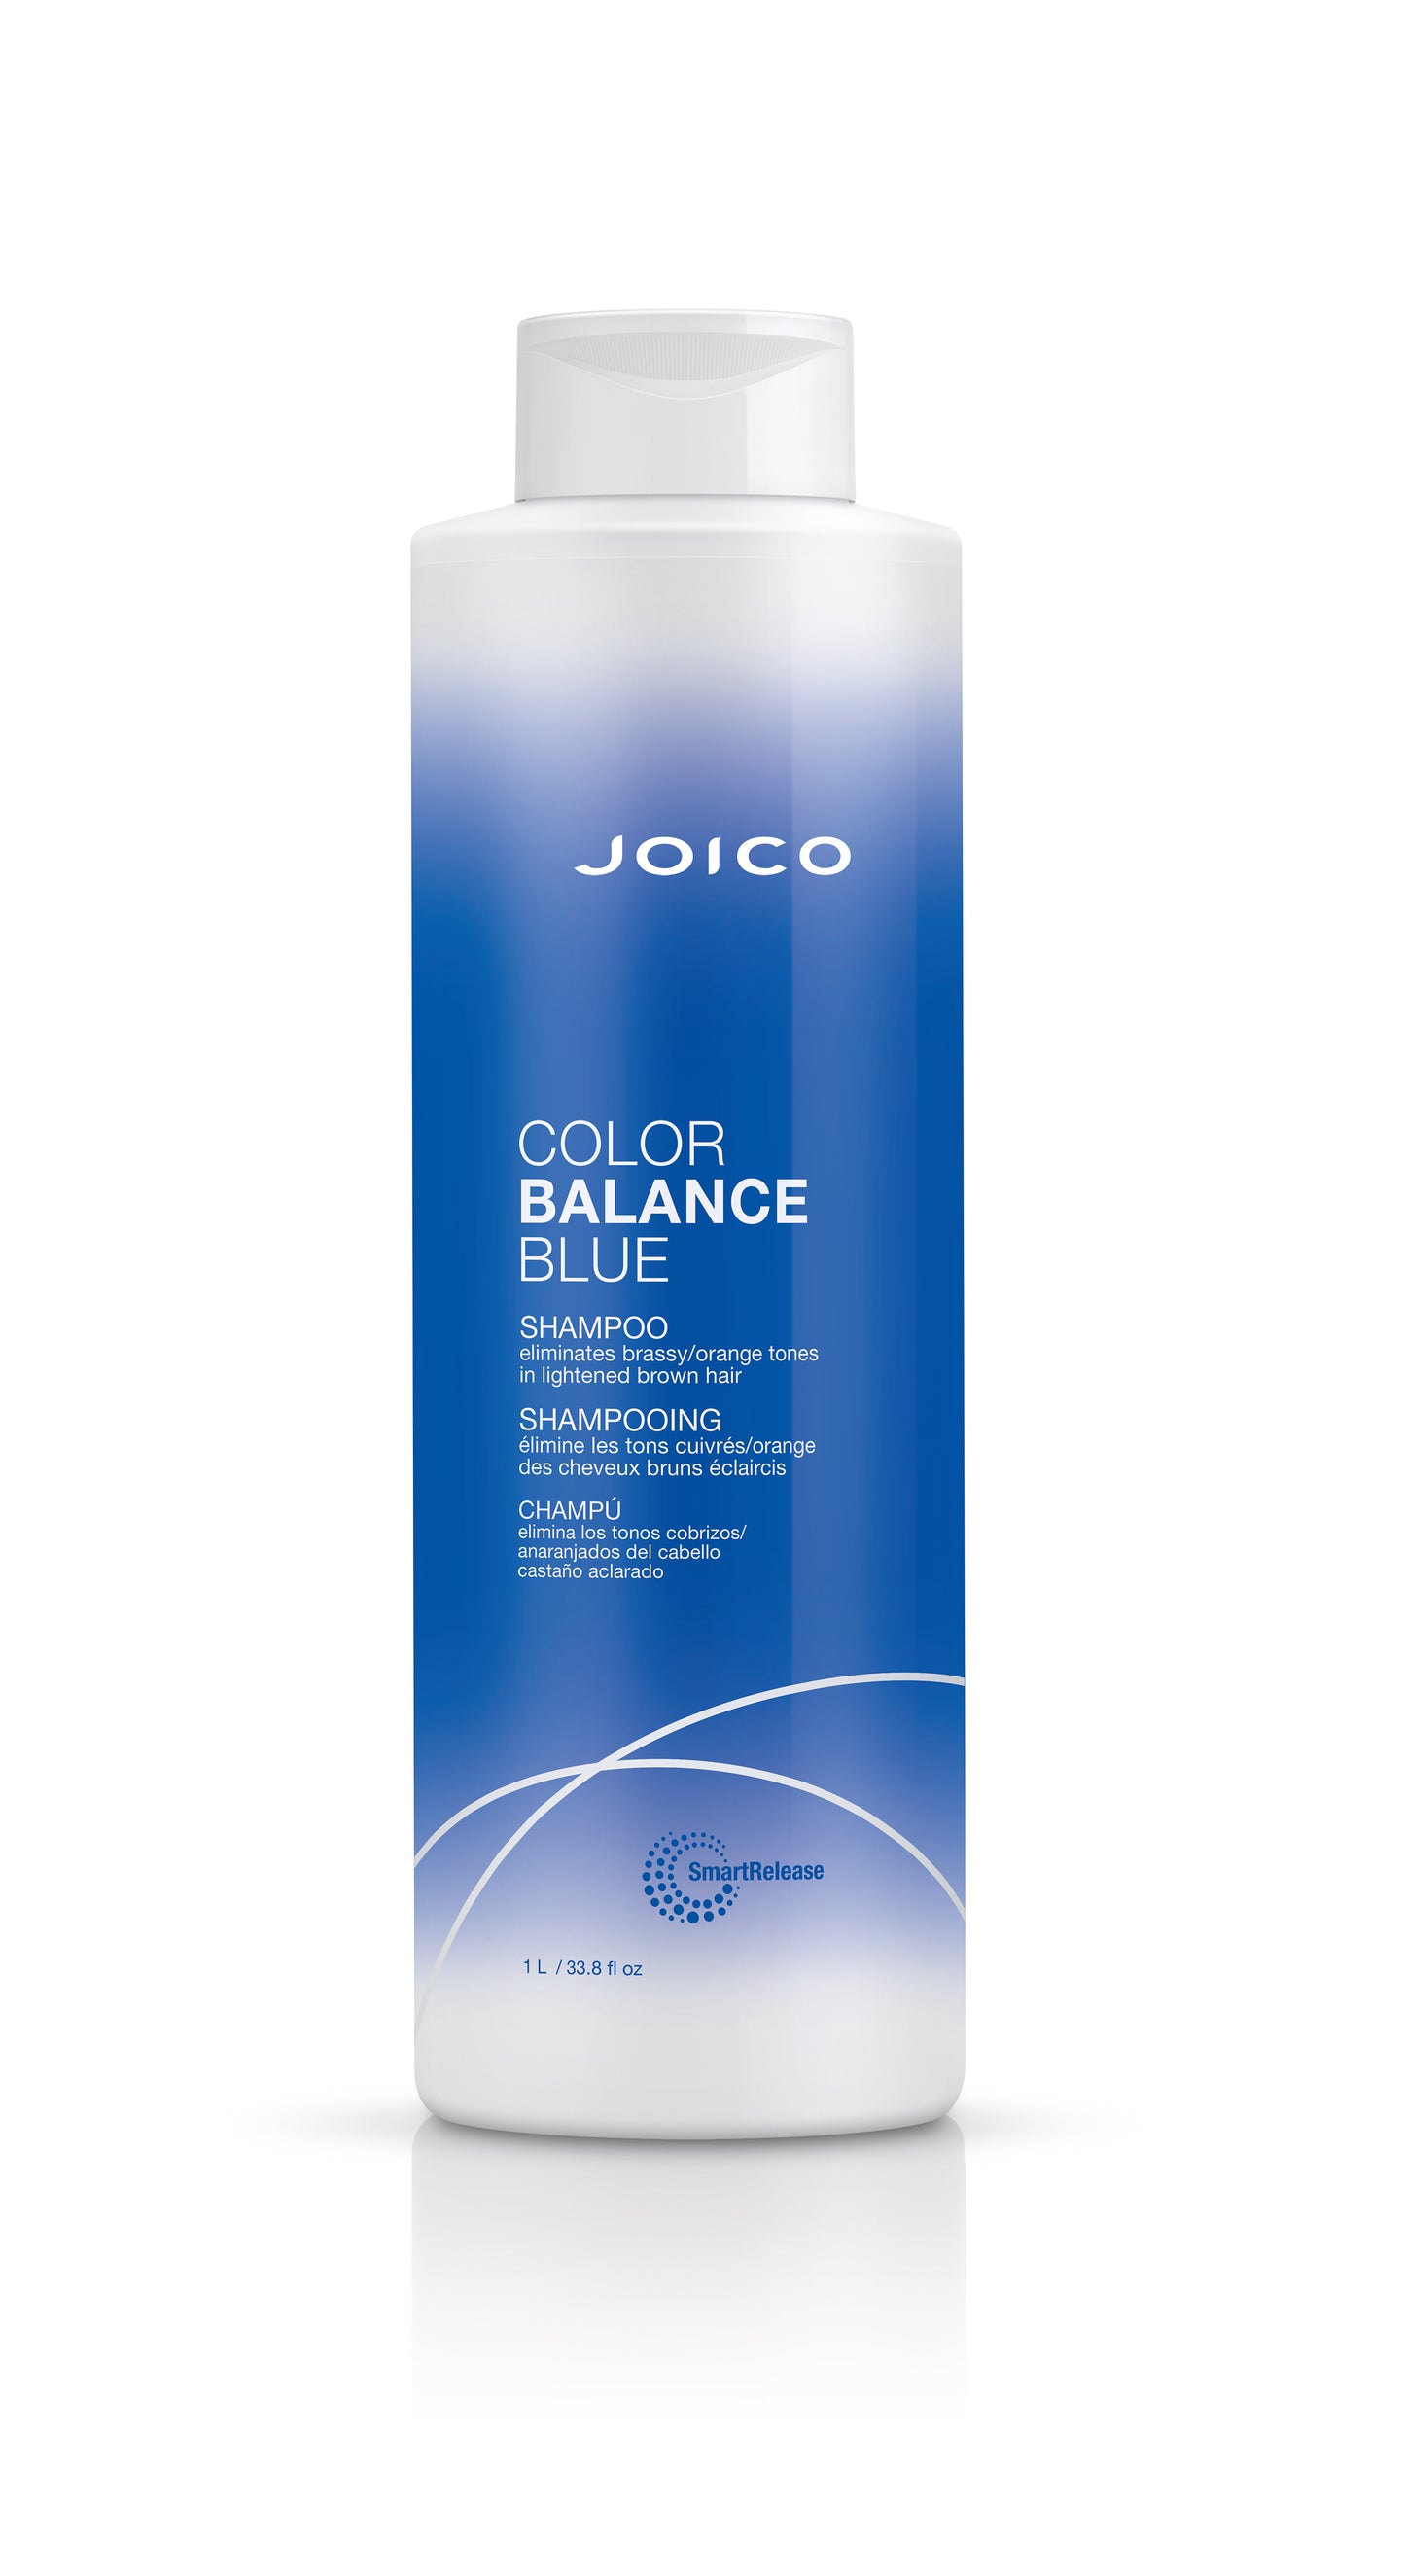 Sham Joico Color Balance Bleu Litre